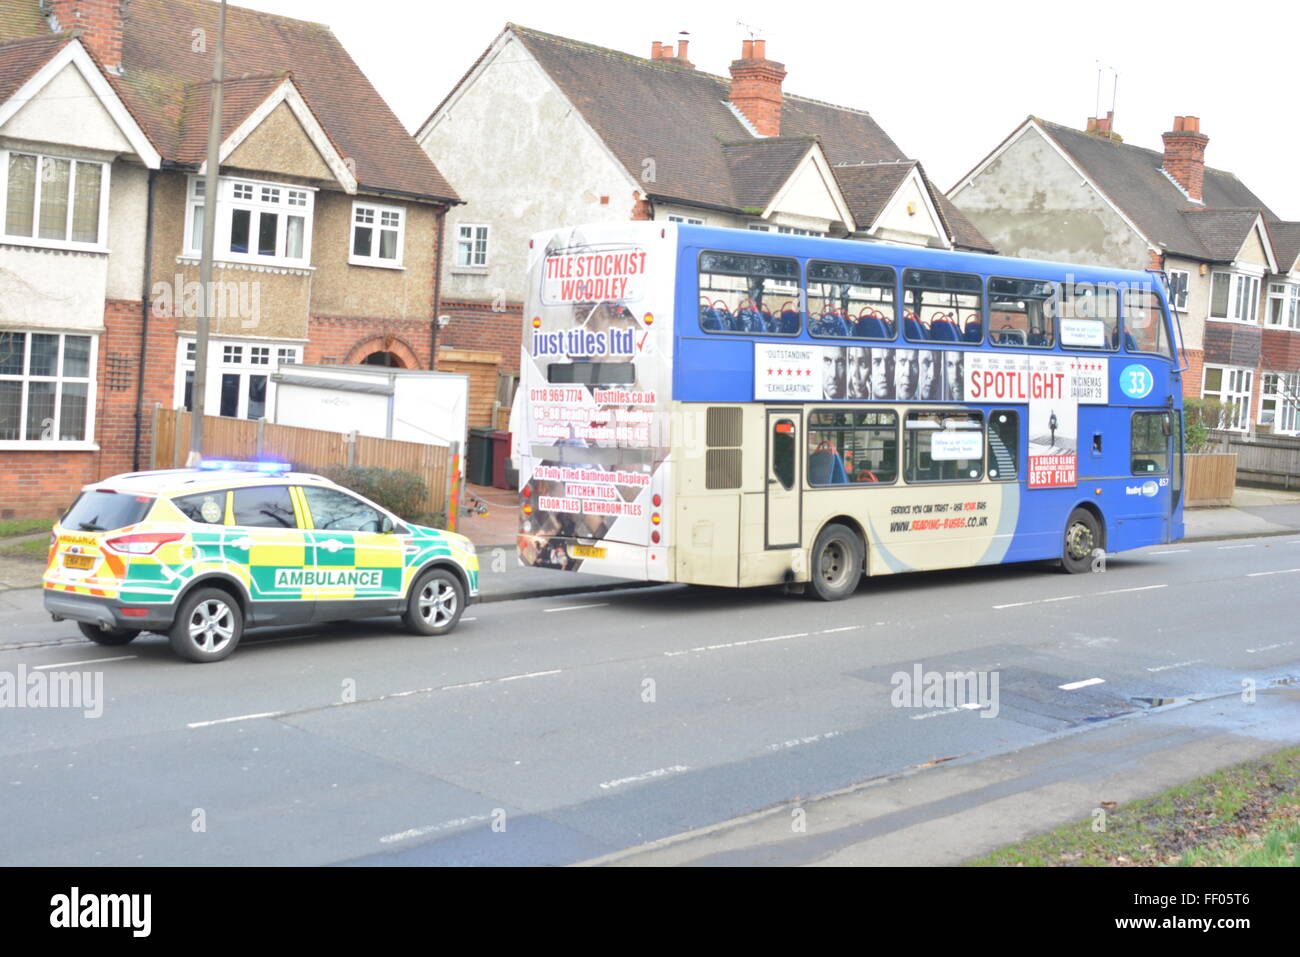 Frau leidet Kopfverletzung in Tilehurst Road, Reading, Berkshire, nachdem Bus mit Auto kollidiert. Charles Dye / Alamy Live News. Stockfoto